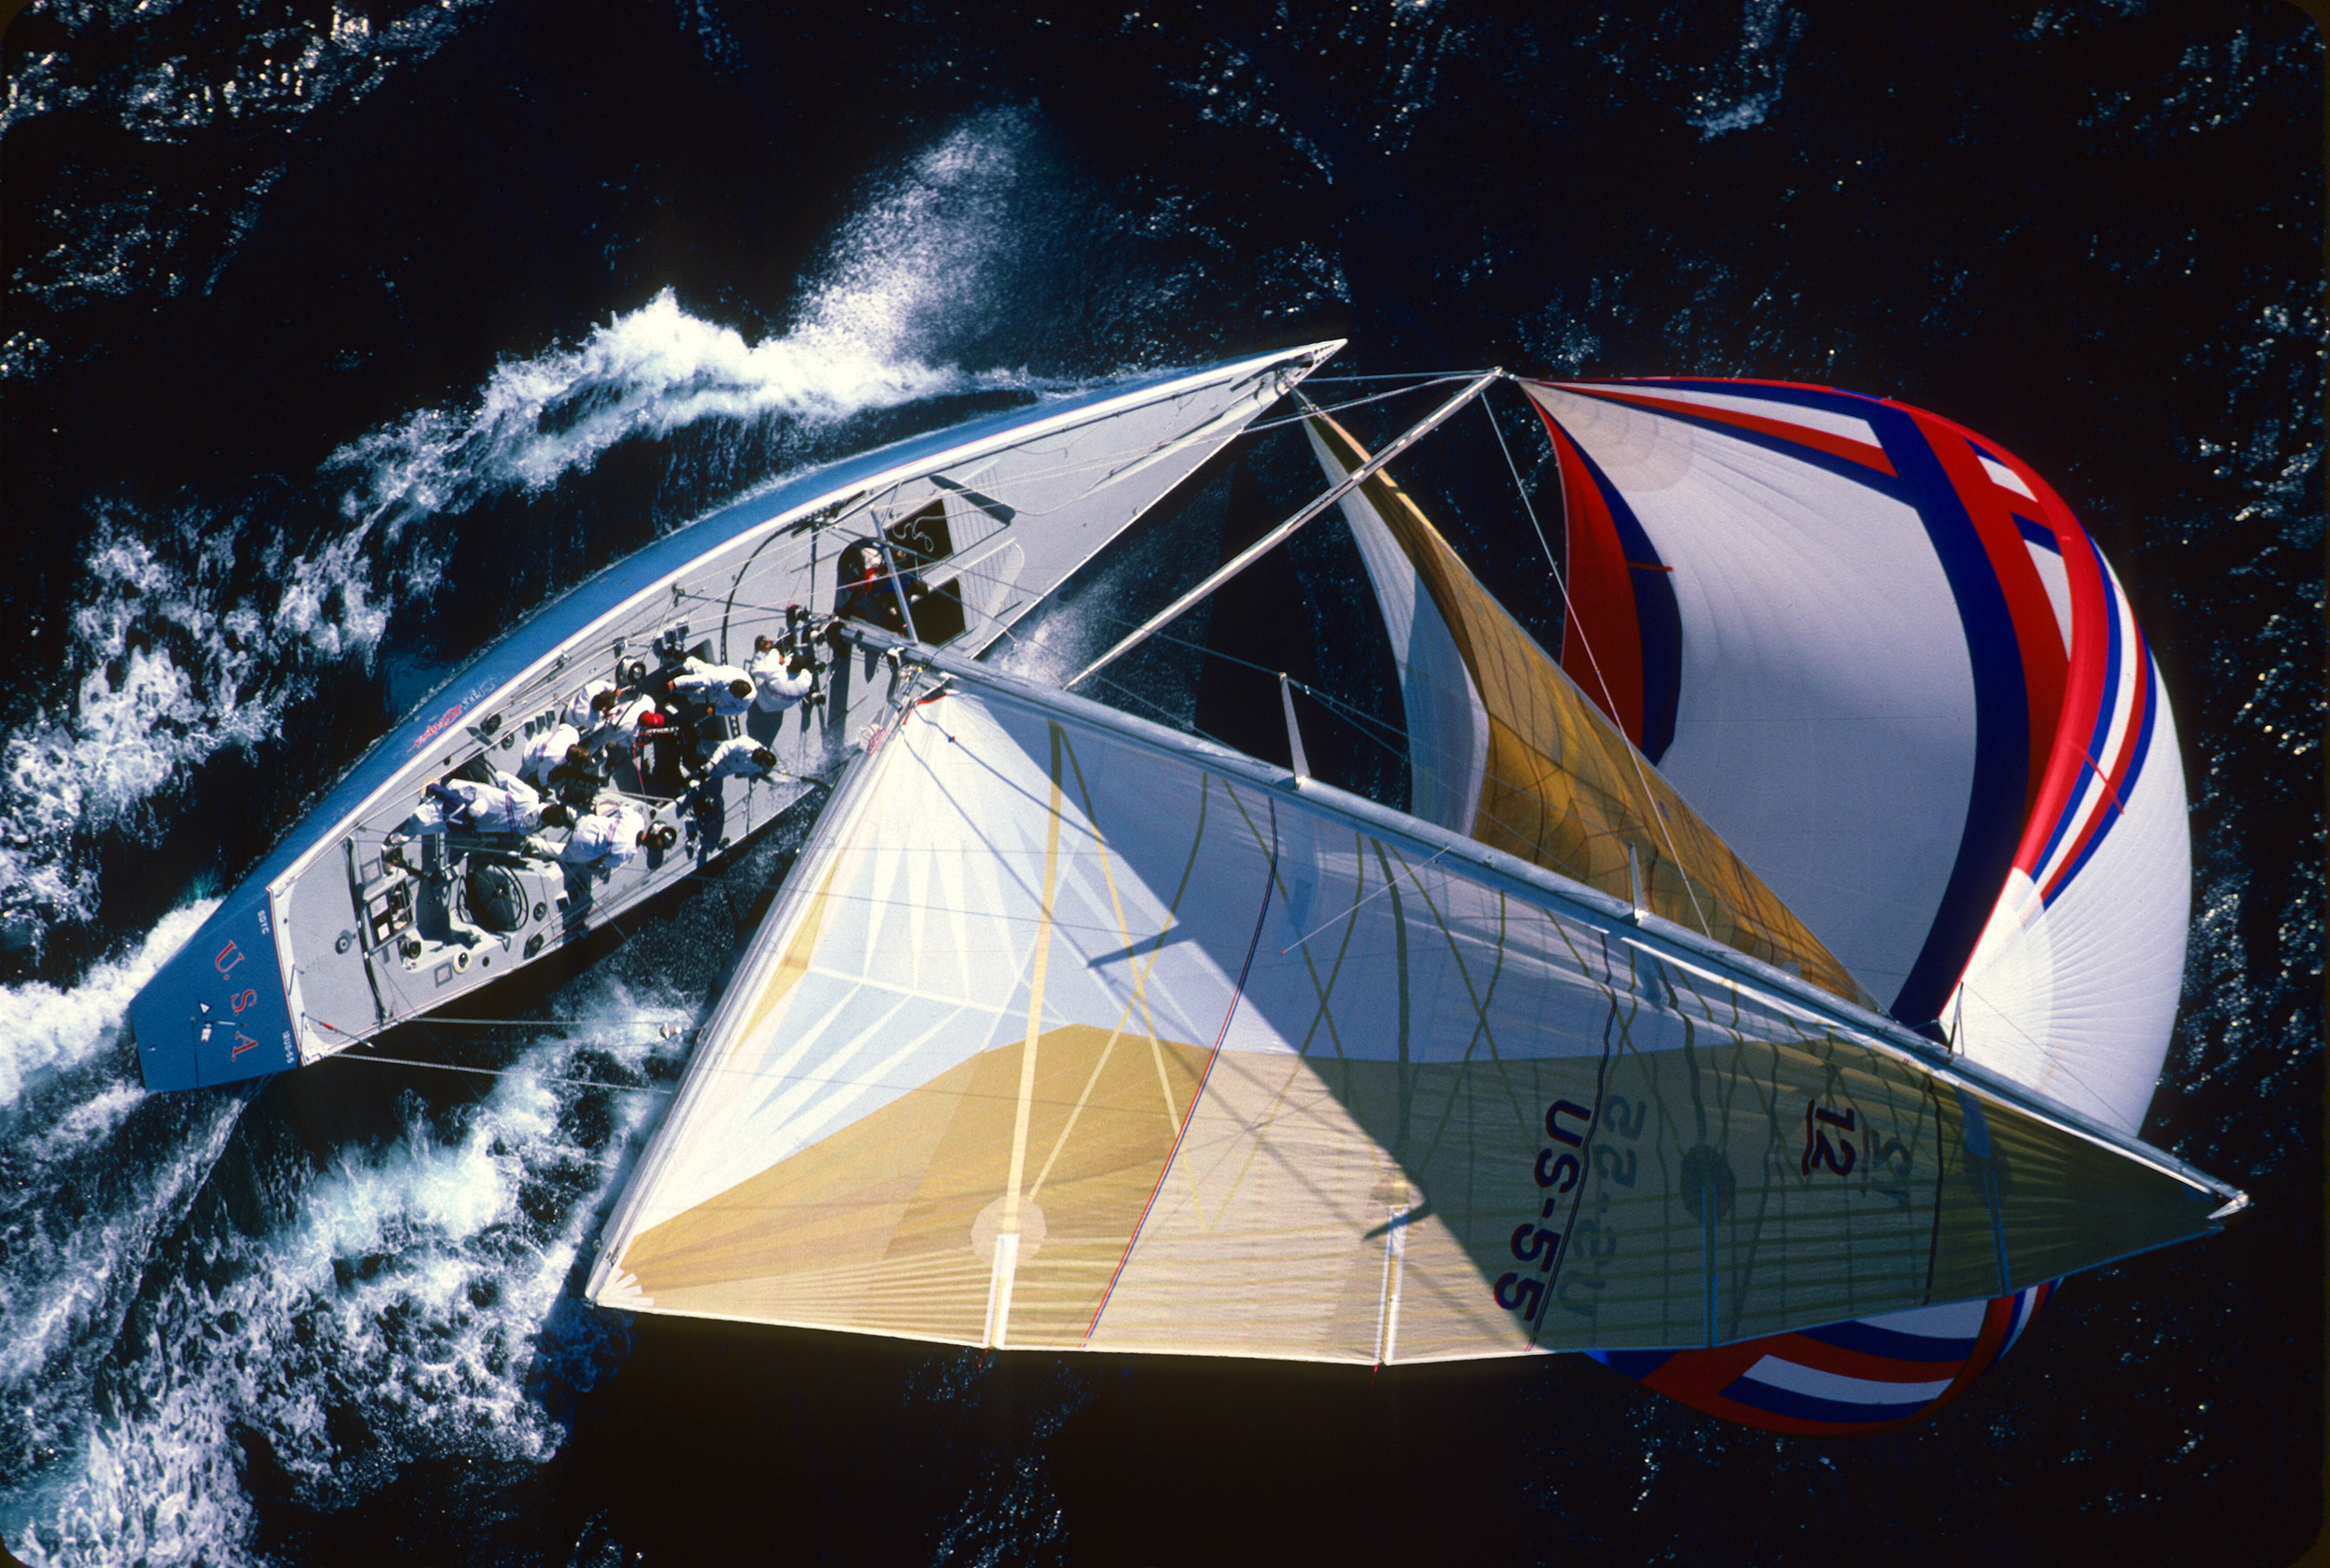  Dennis Conner helming the <em>Stars &amp; Stripes</em> off Perth, Australia, 1987